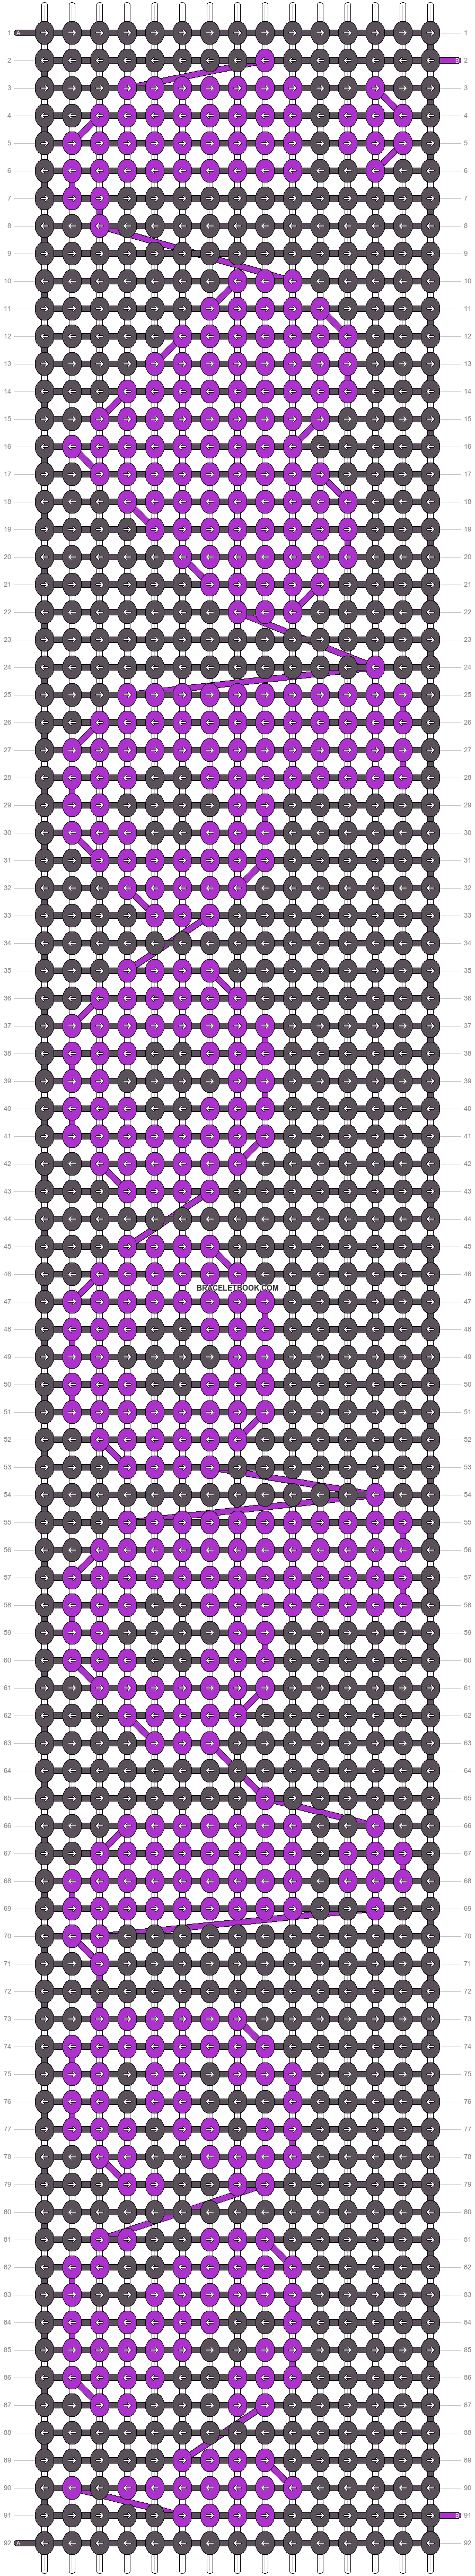 Alpha pattern #2717 variation #57955 pattern